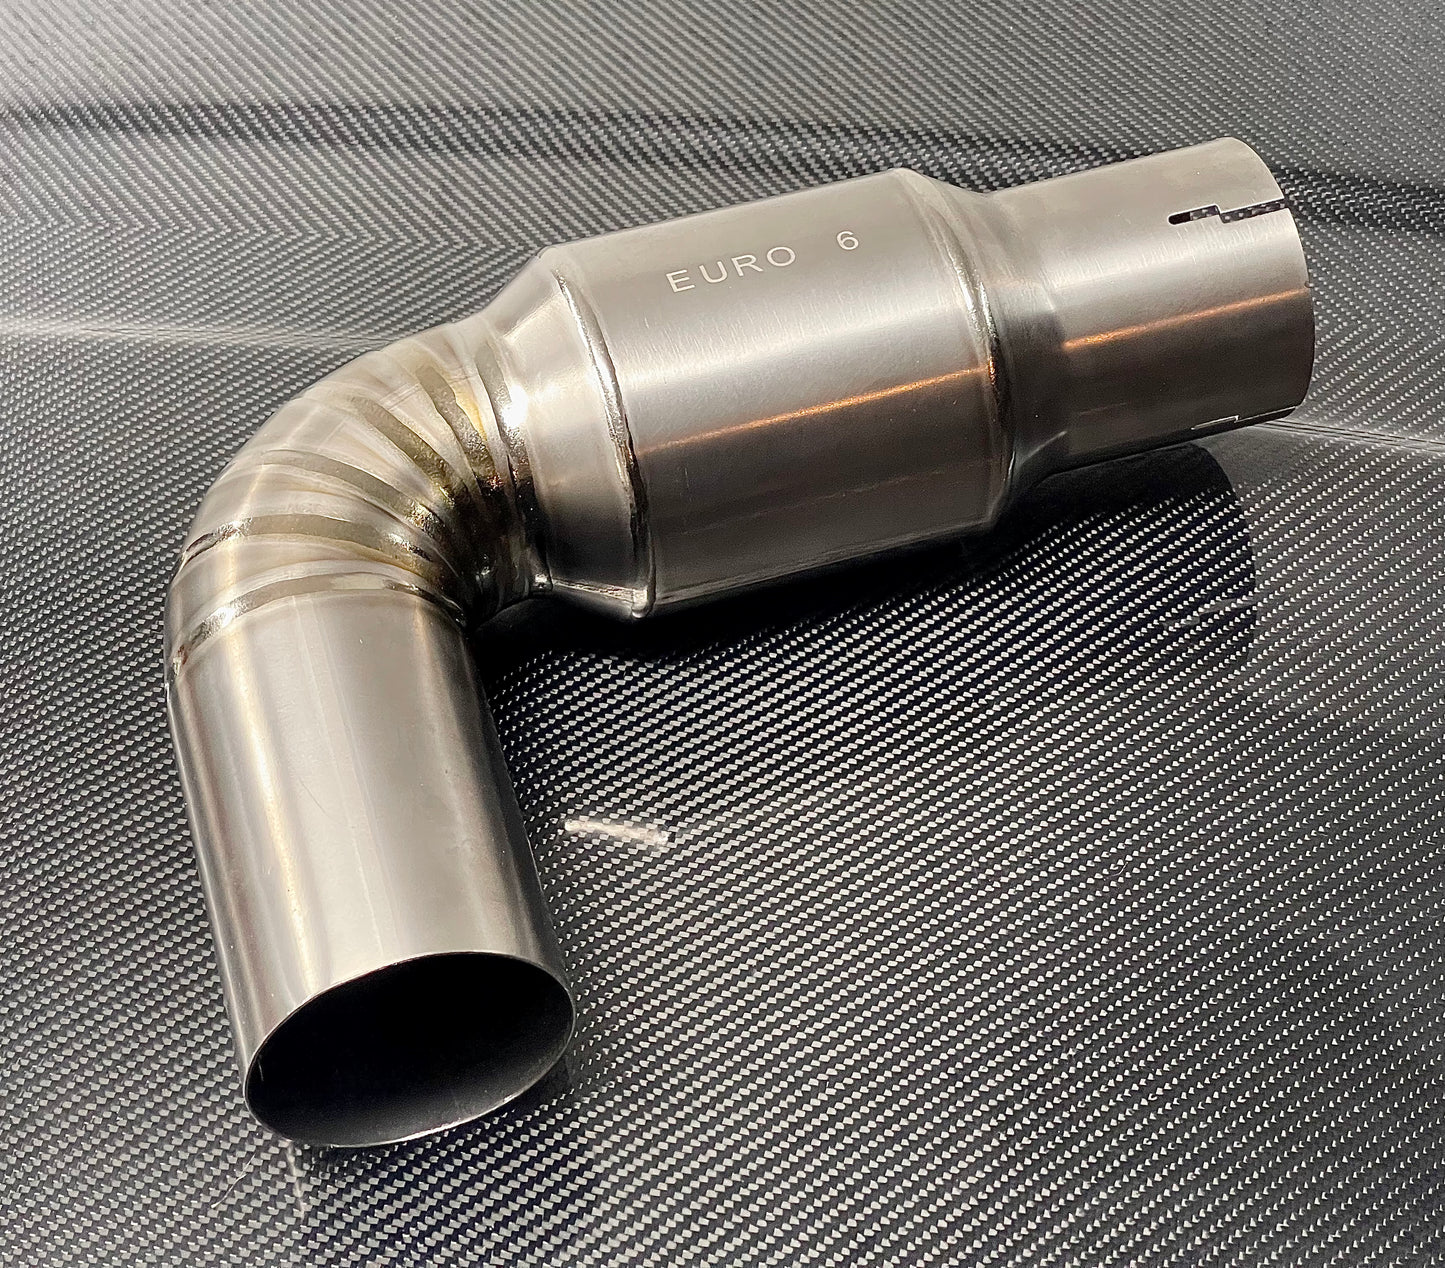 EURO 6 titanium lightweight catalysts pipe by GT Australia